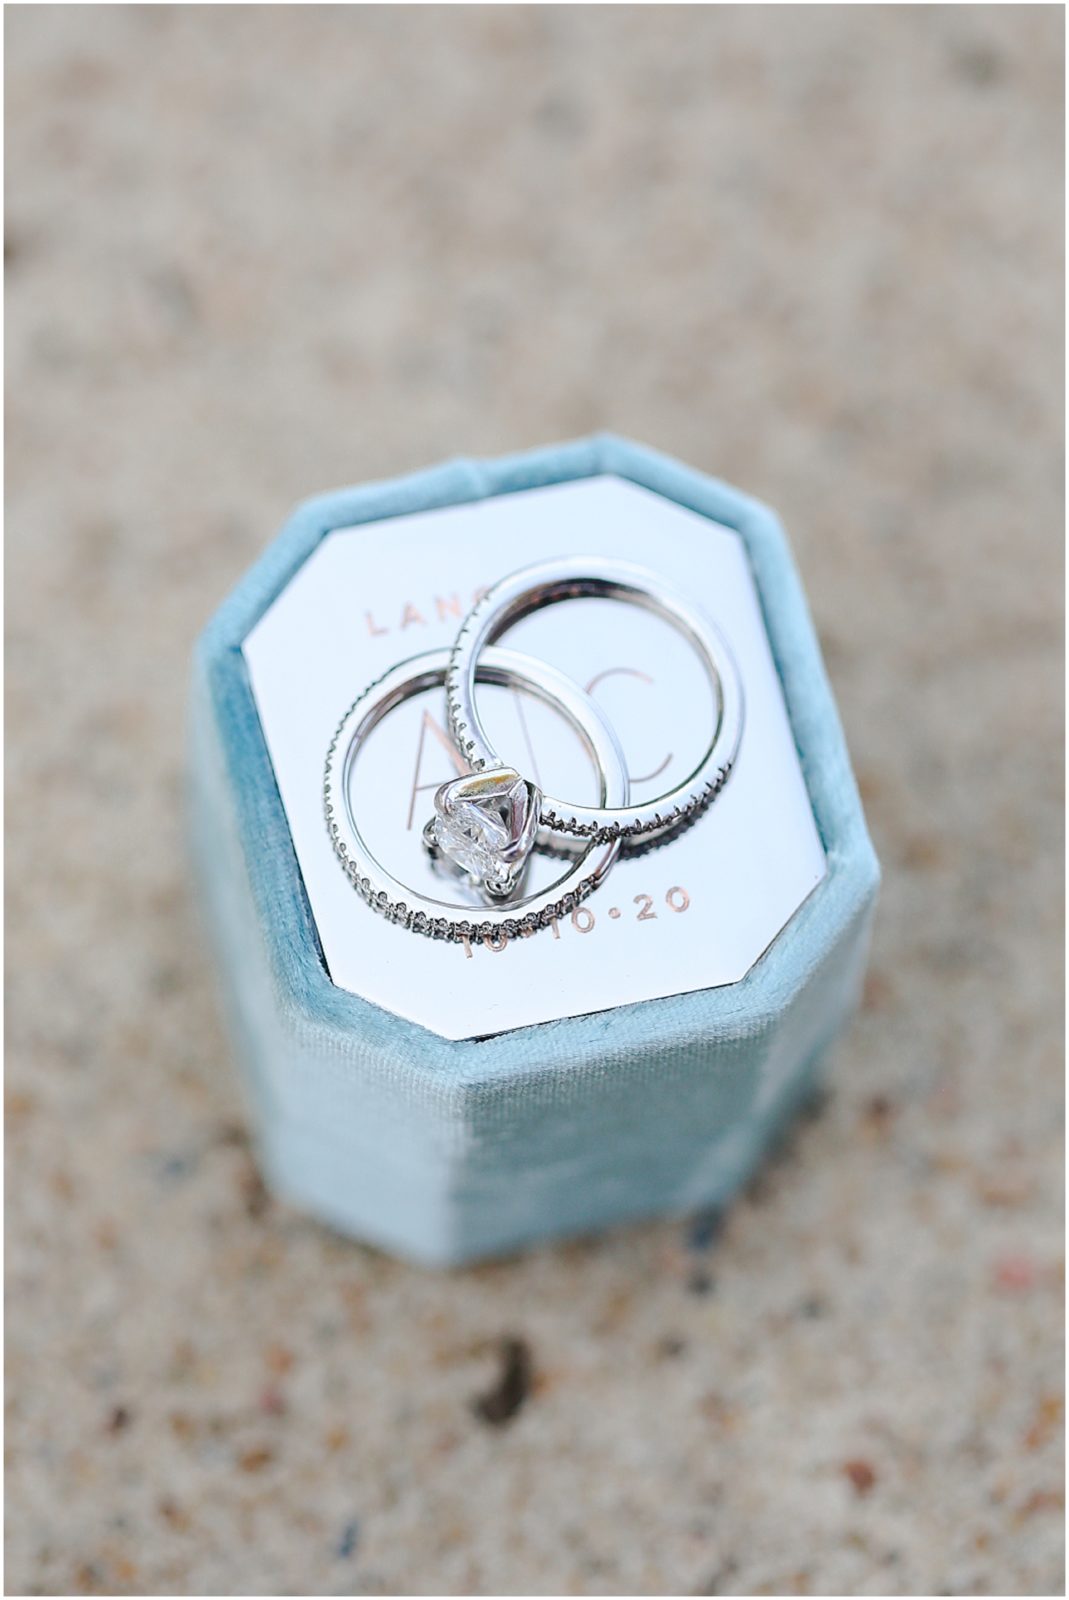 the Mrs. Box 
Ring Box 
Ring Photo detail
Engagement Ring